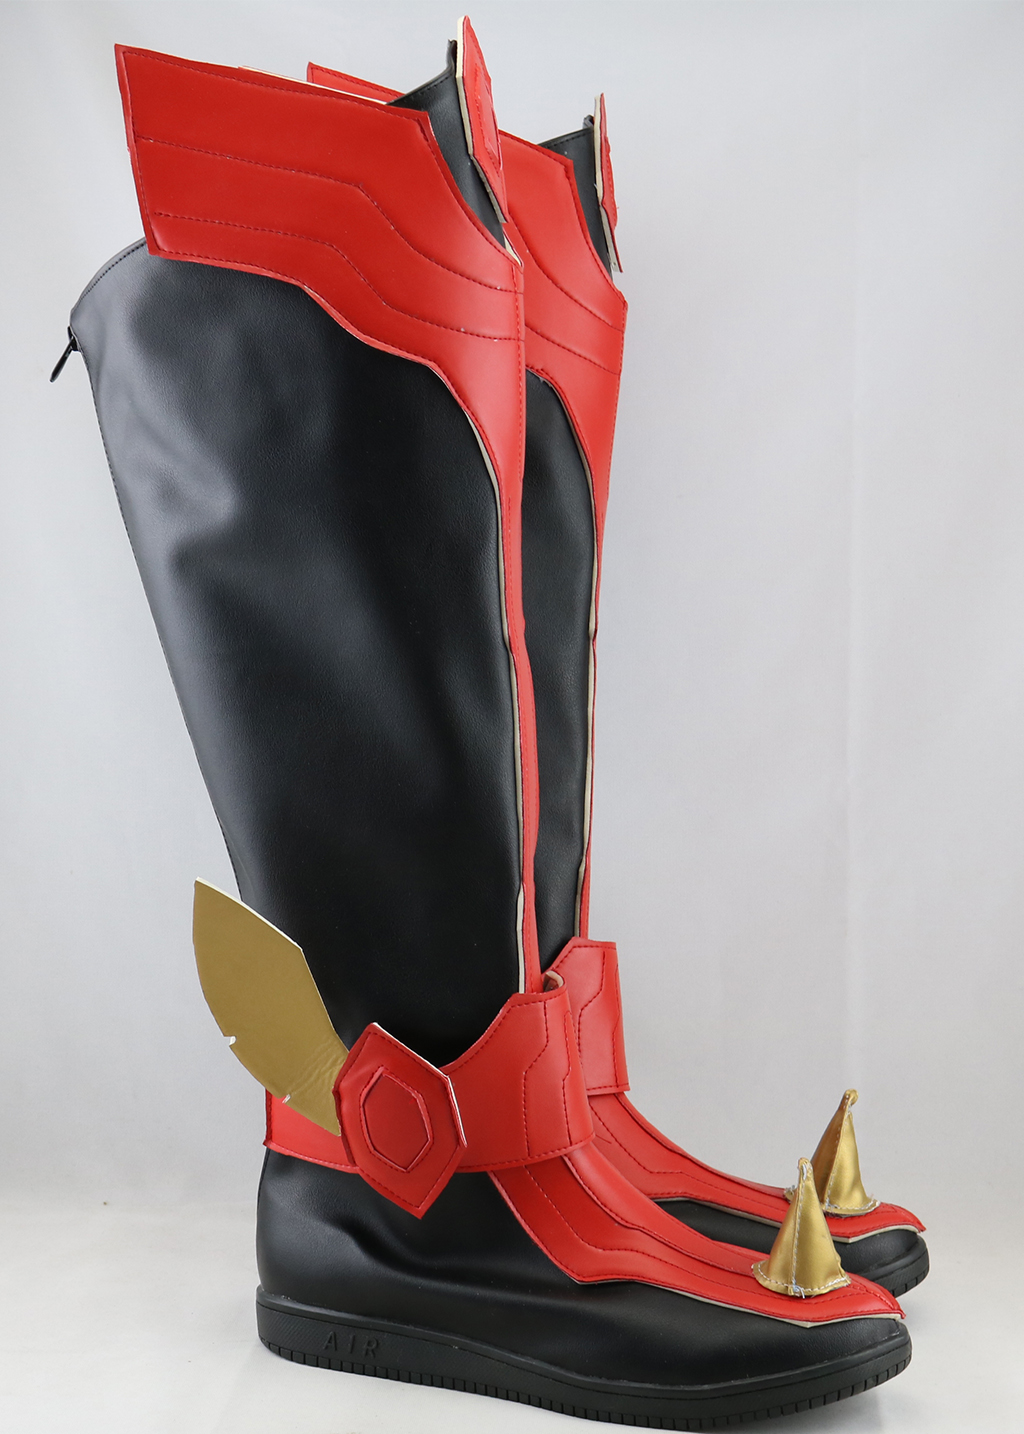 Kamen Rider OOO Tajadol Combo Shoes Cosplay Men Masked Rider Boots Red